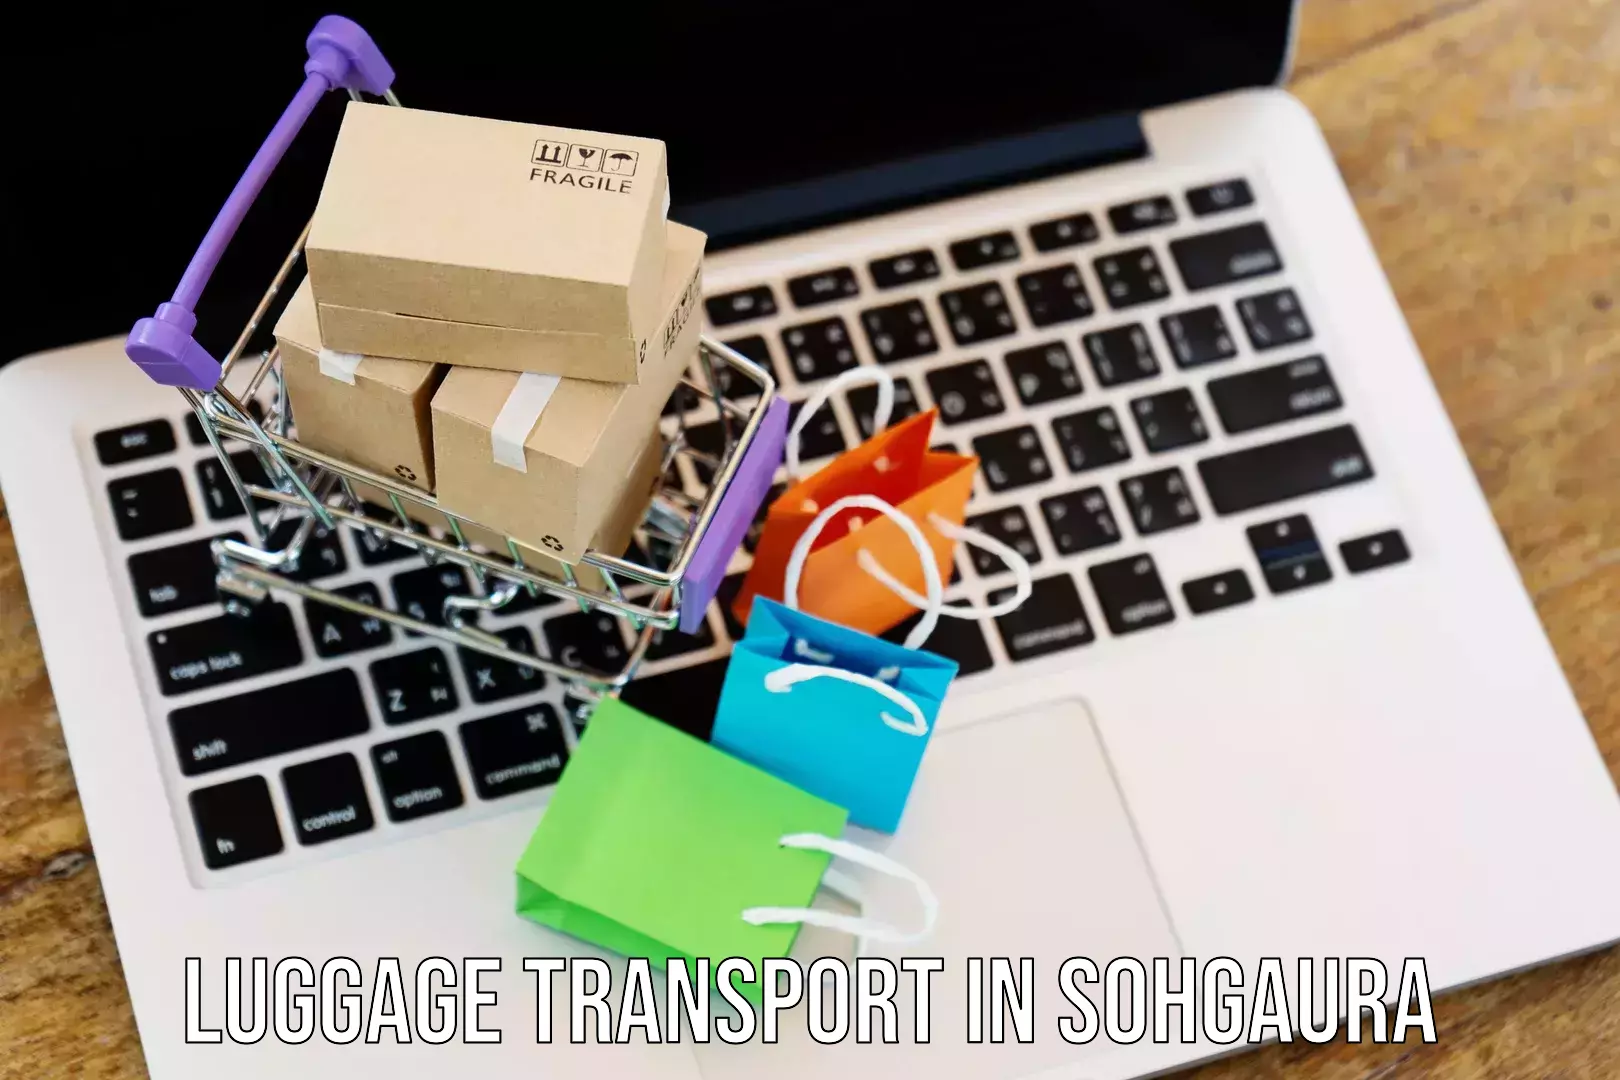 Baggage transport estimate in Sohgaura